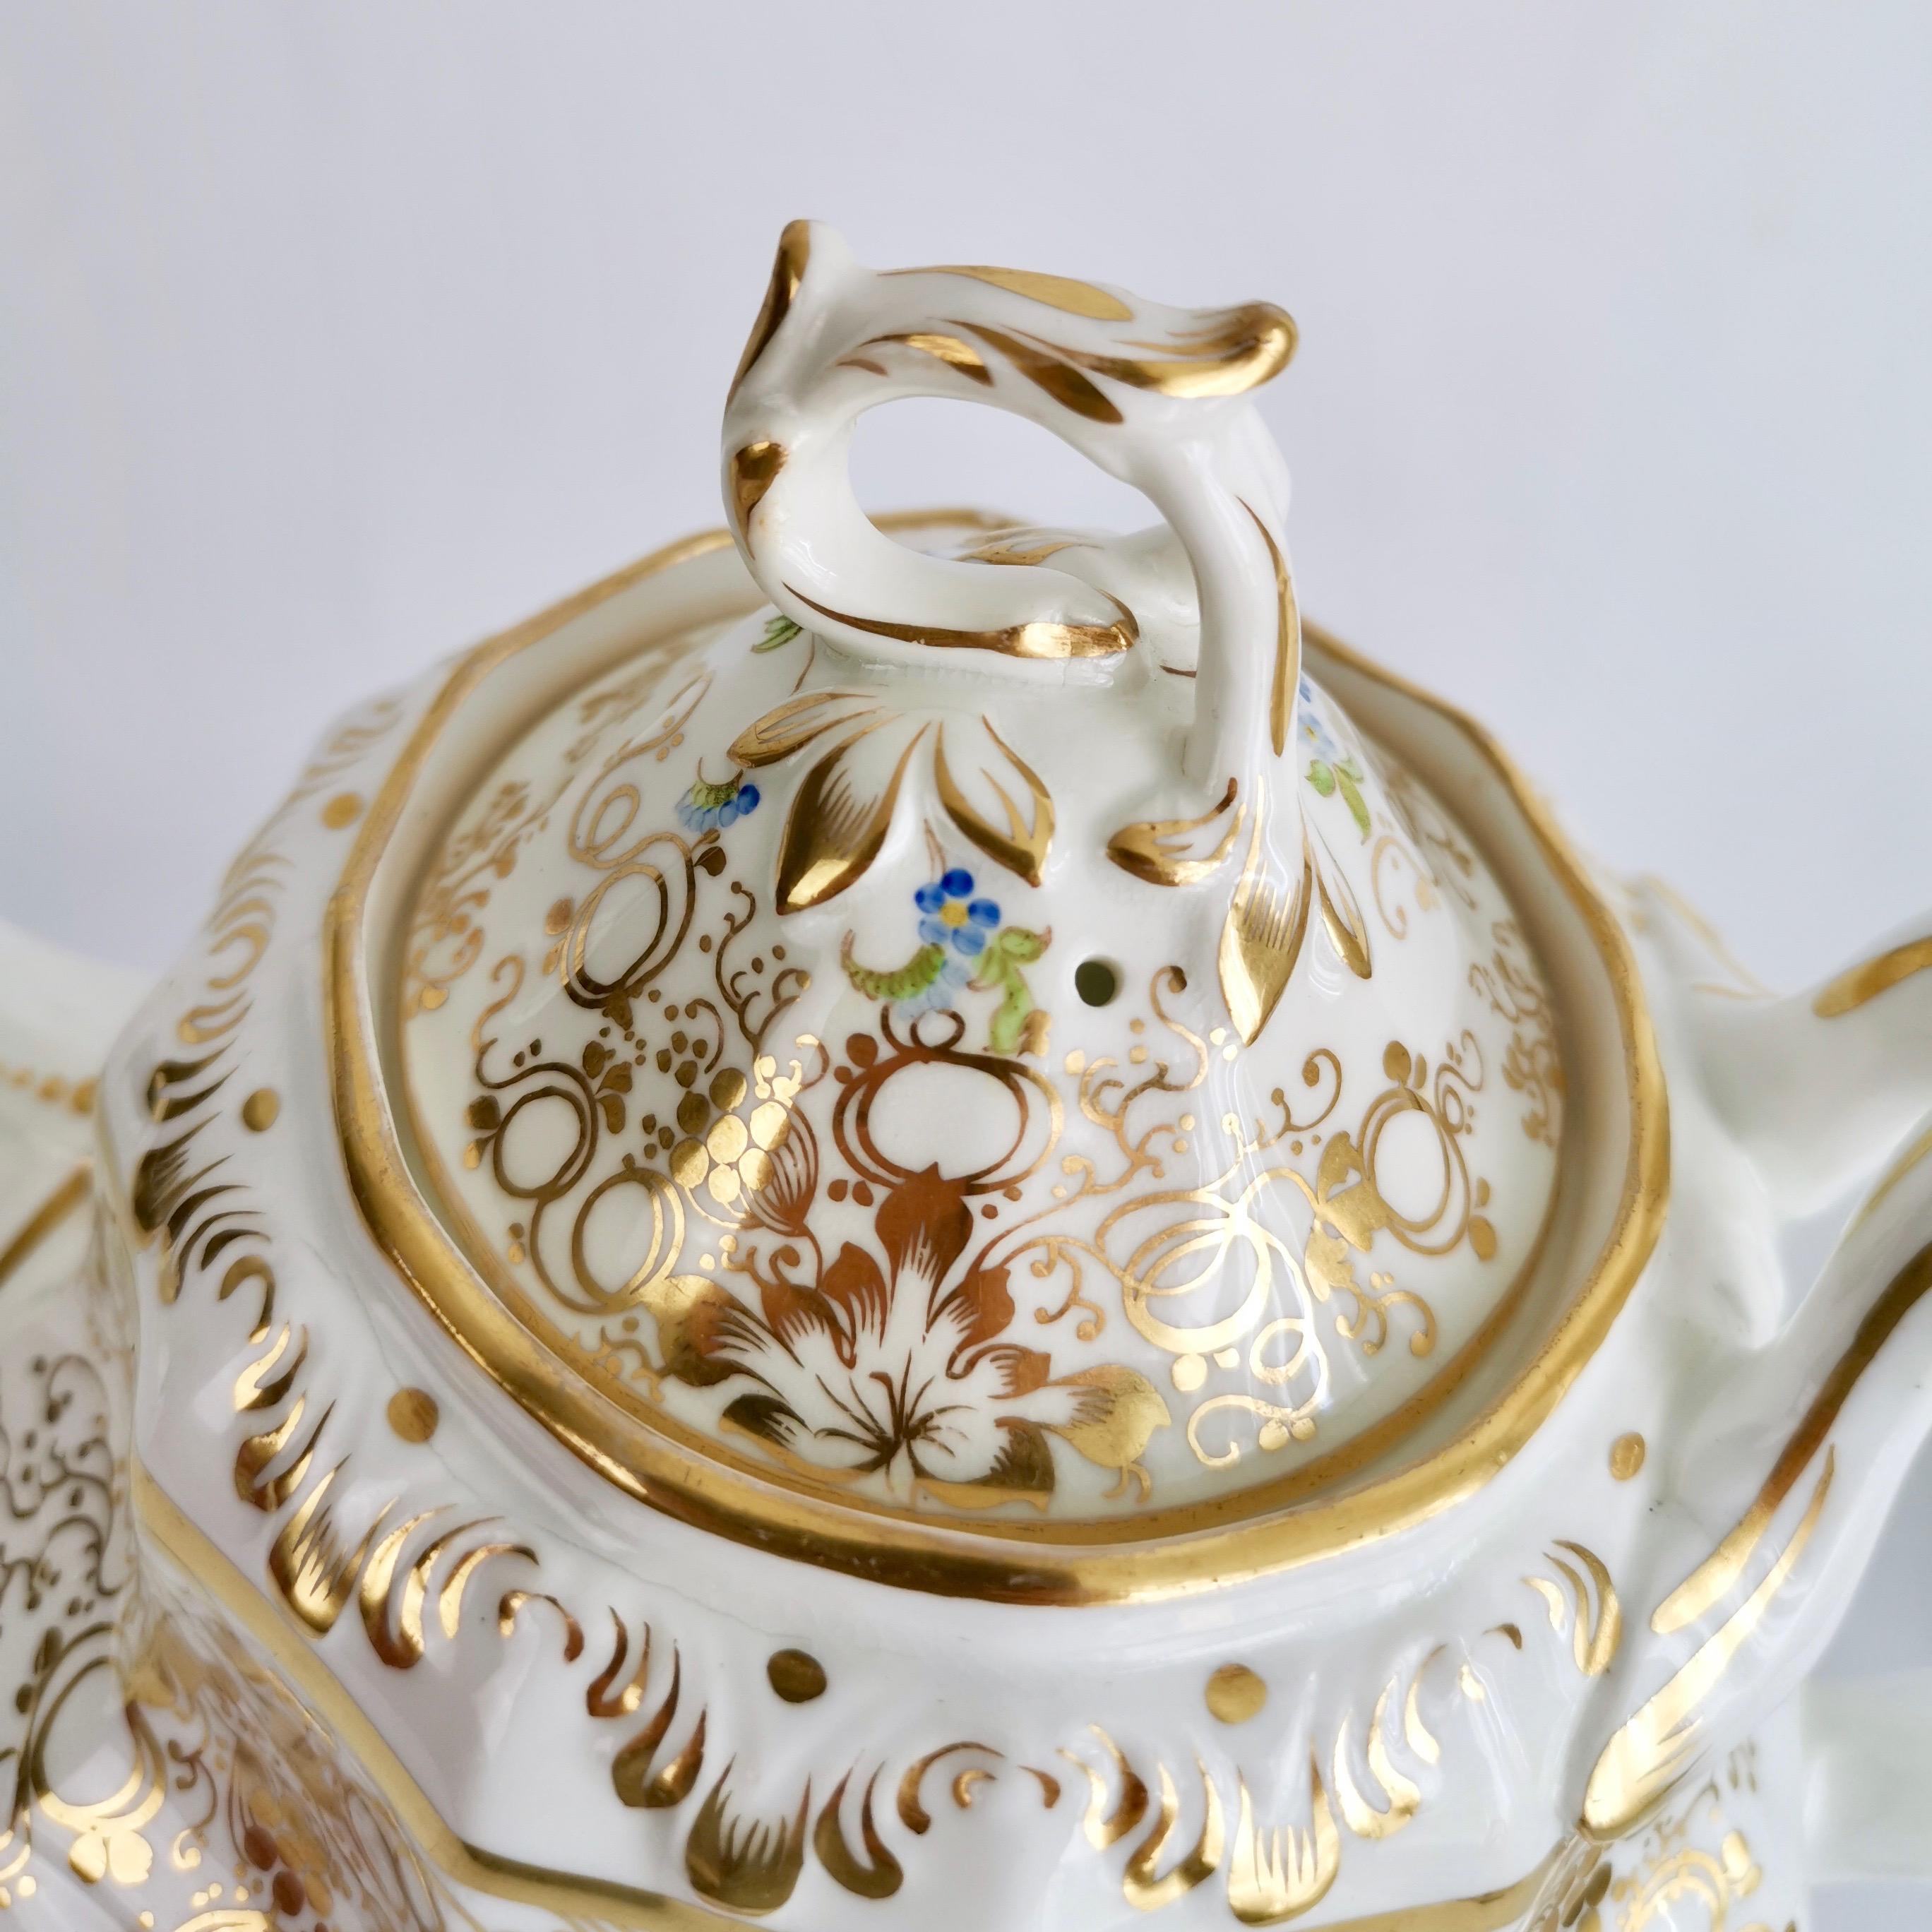 English Staffordshire Porcelain Tea Service, White and Gilt, Rococo Revival, circa 1845